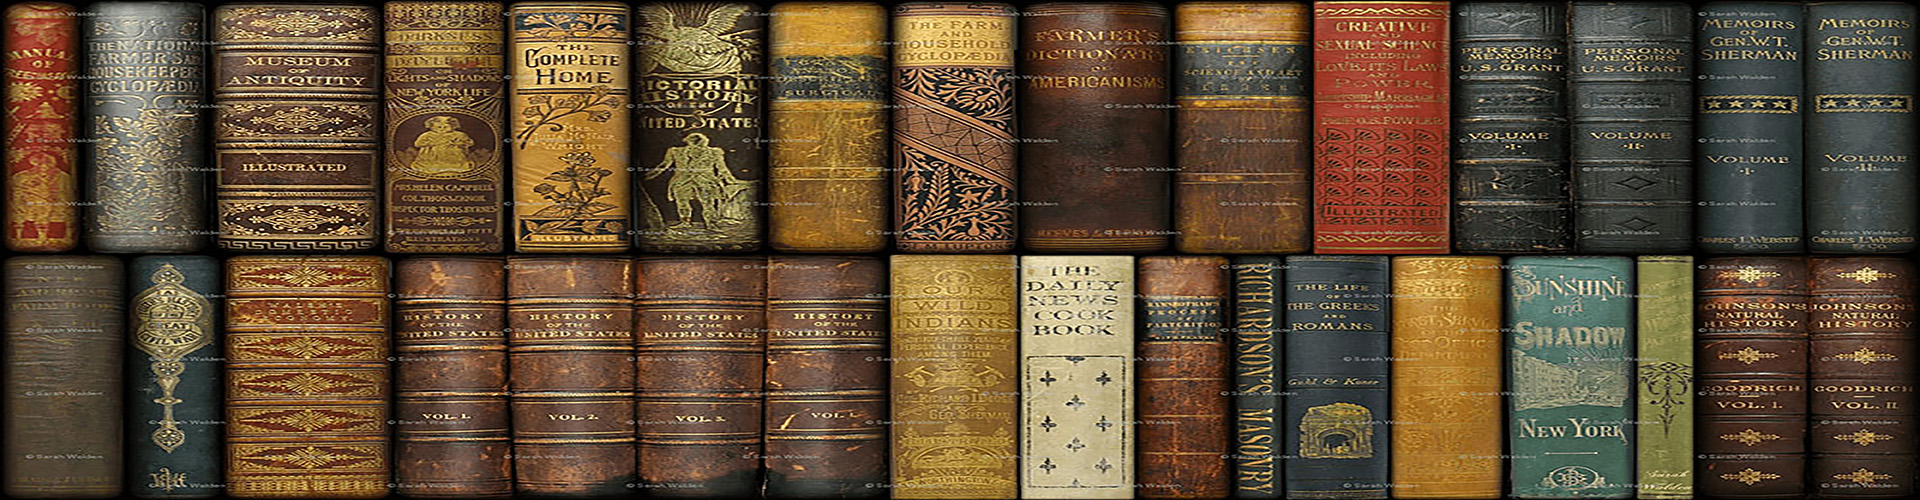 A row of Books Image